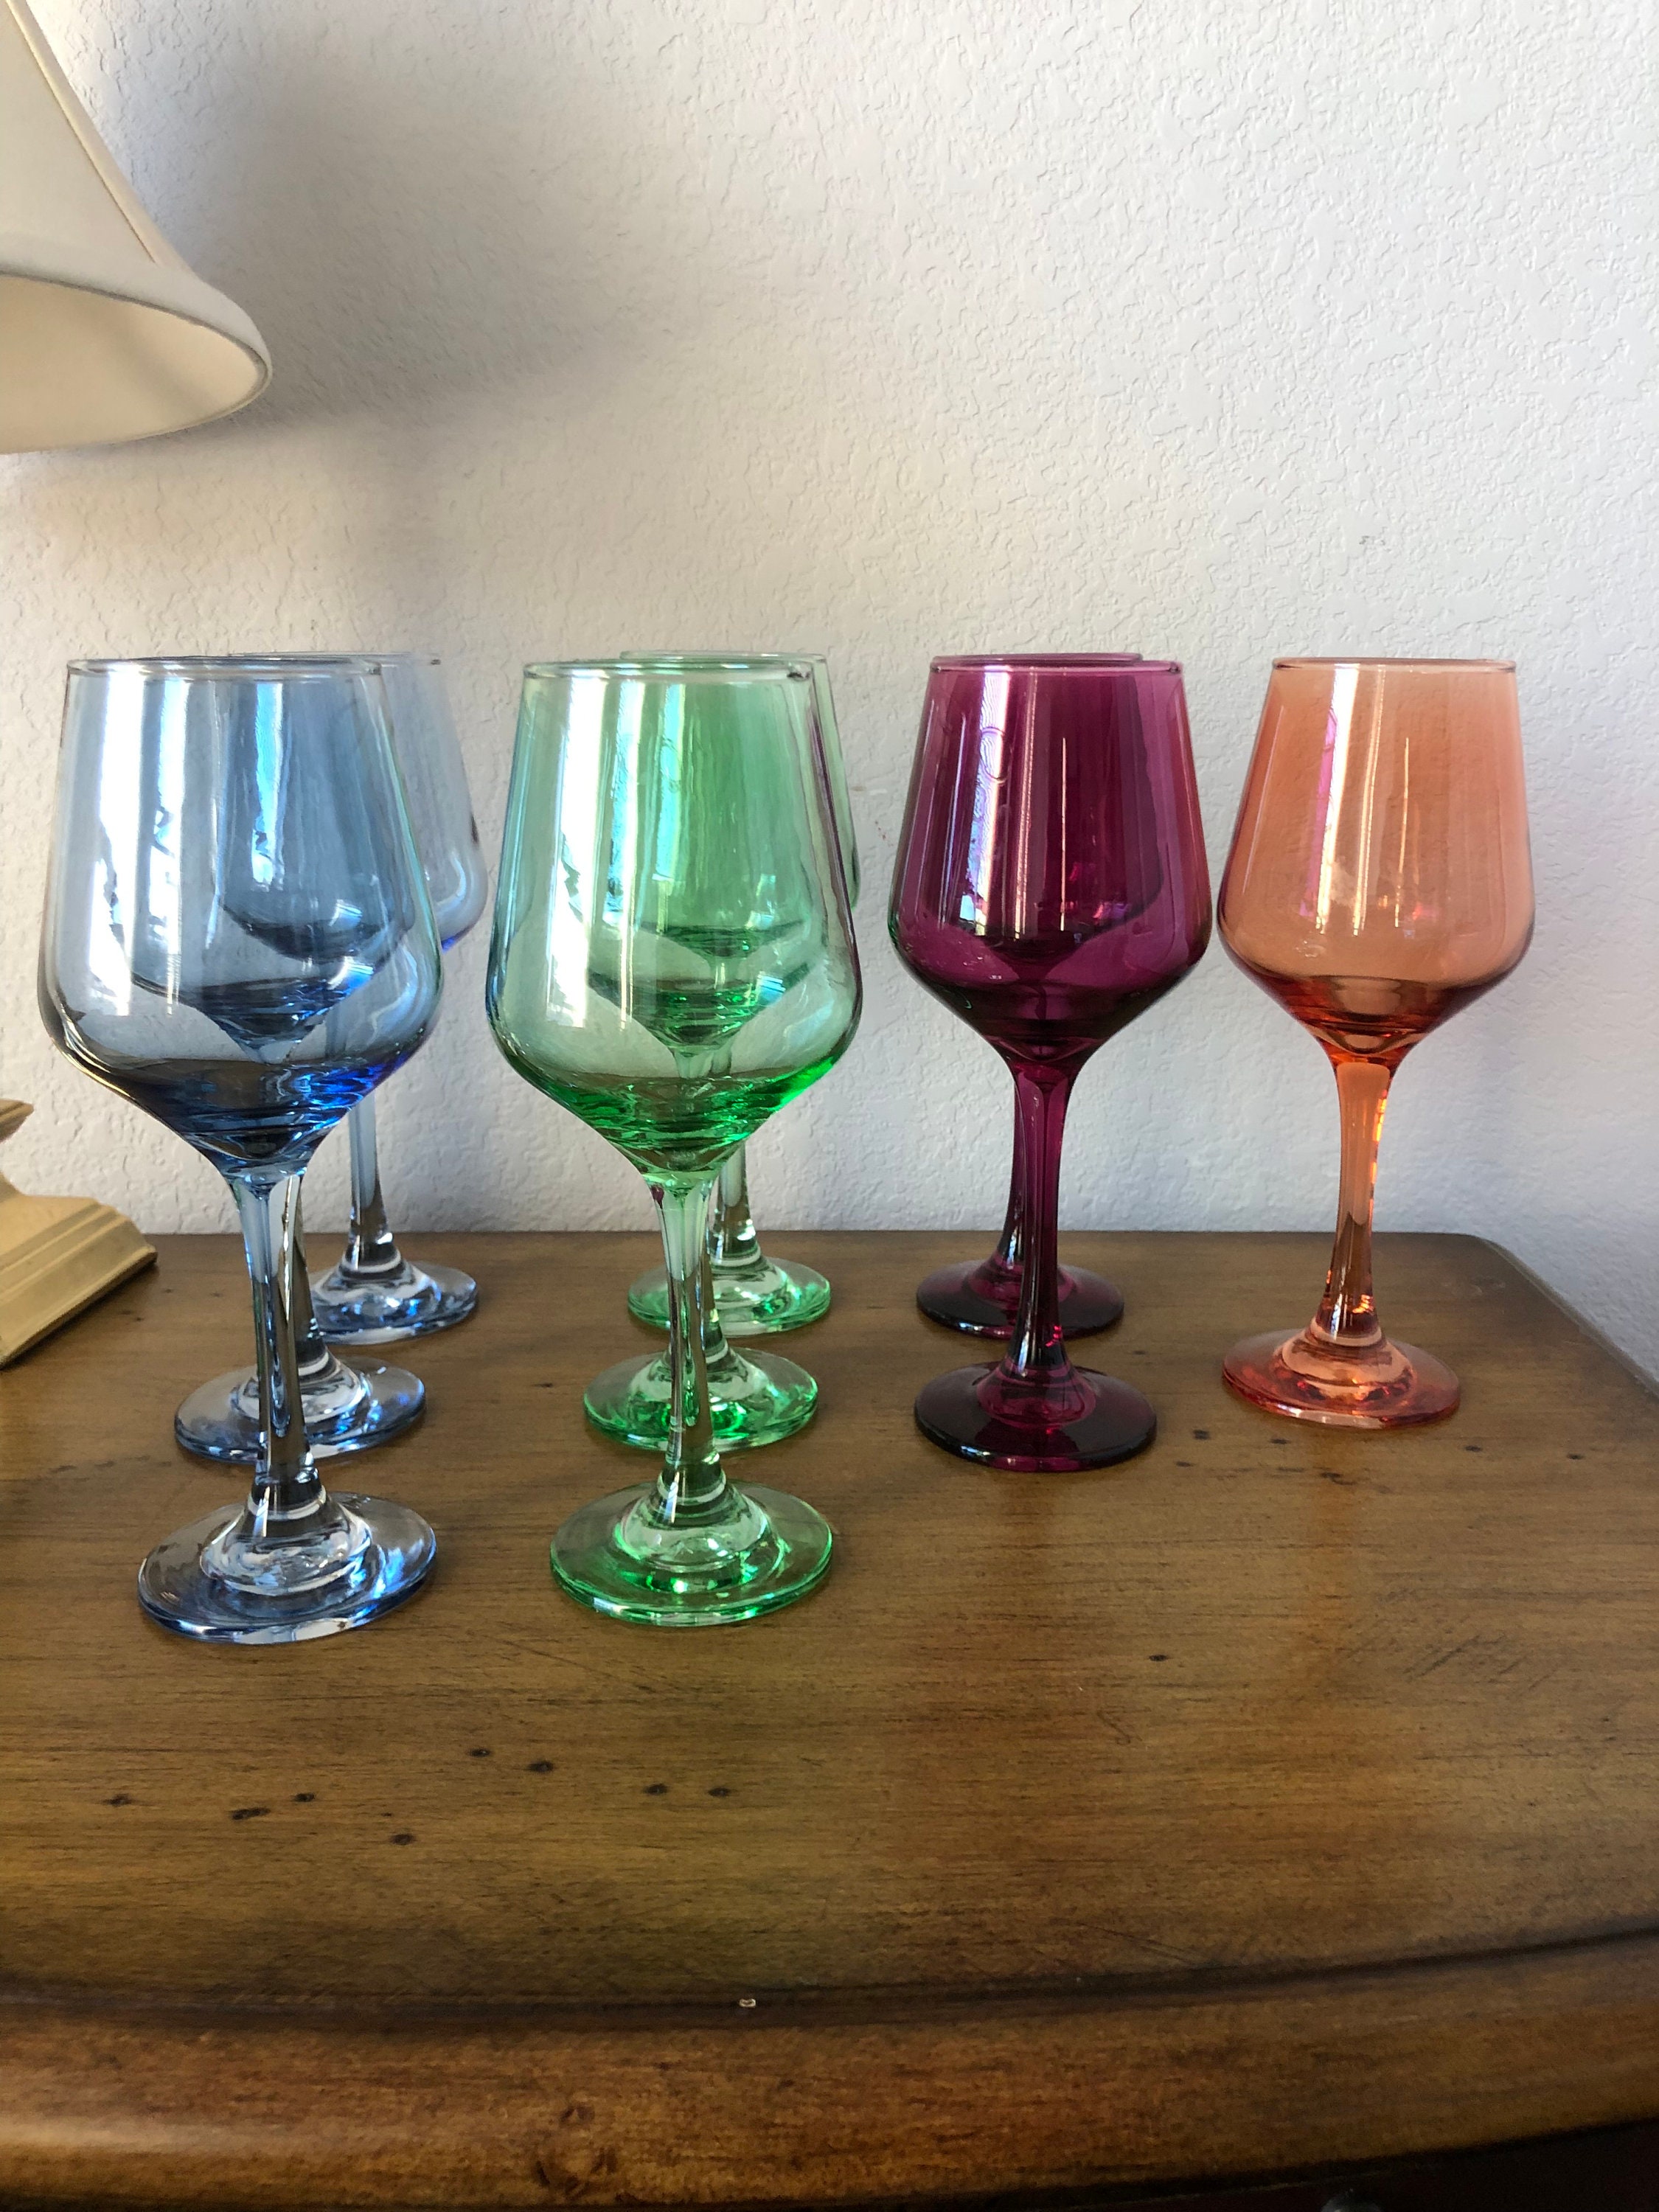 Estelle Colored Wine Glasses - Set of 6, Amethyst– Blue Print